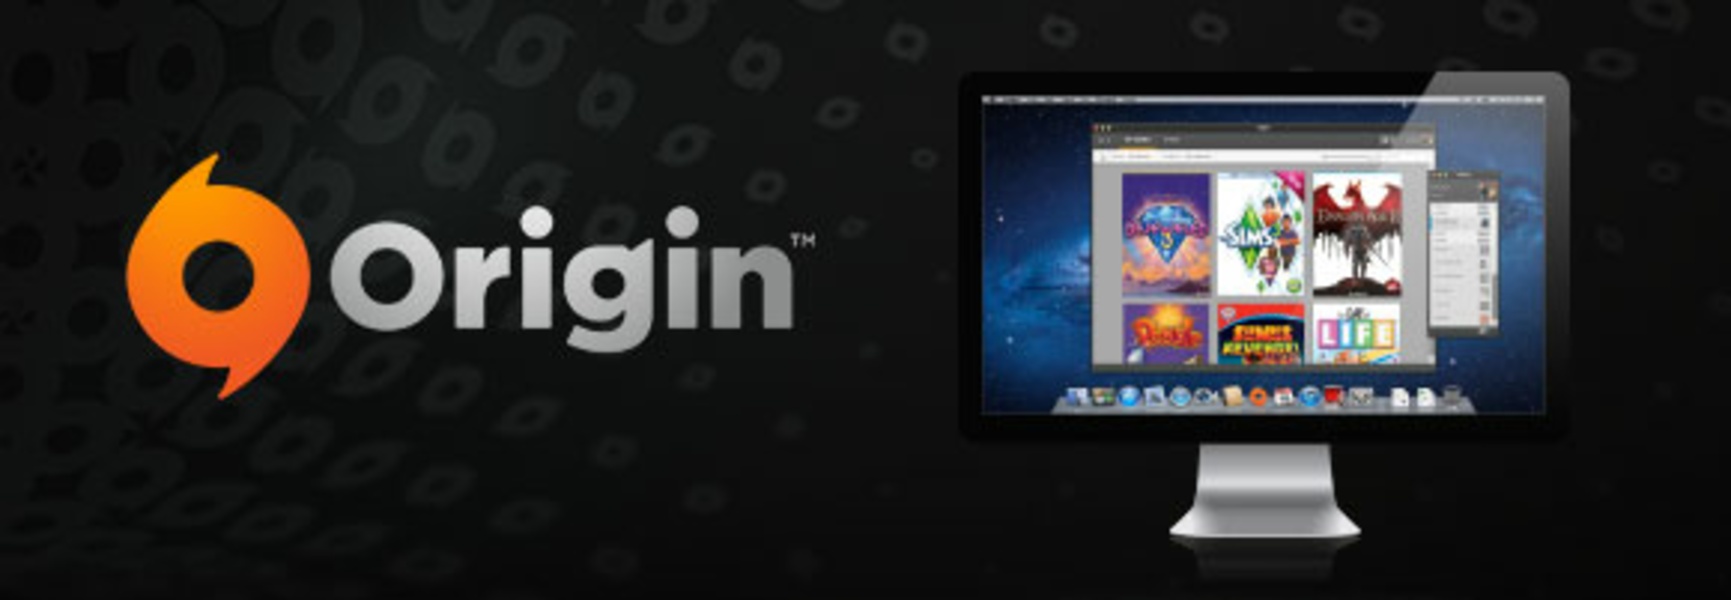 How To Install Origin On Mac 